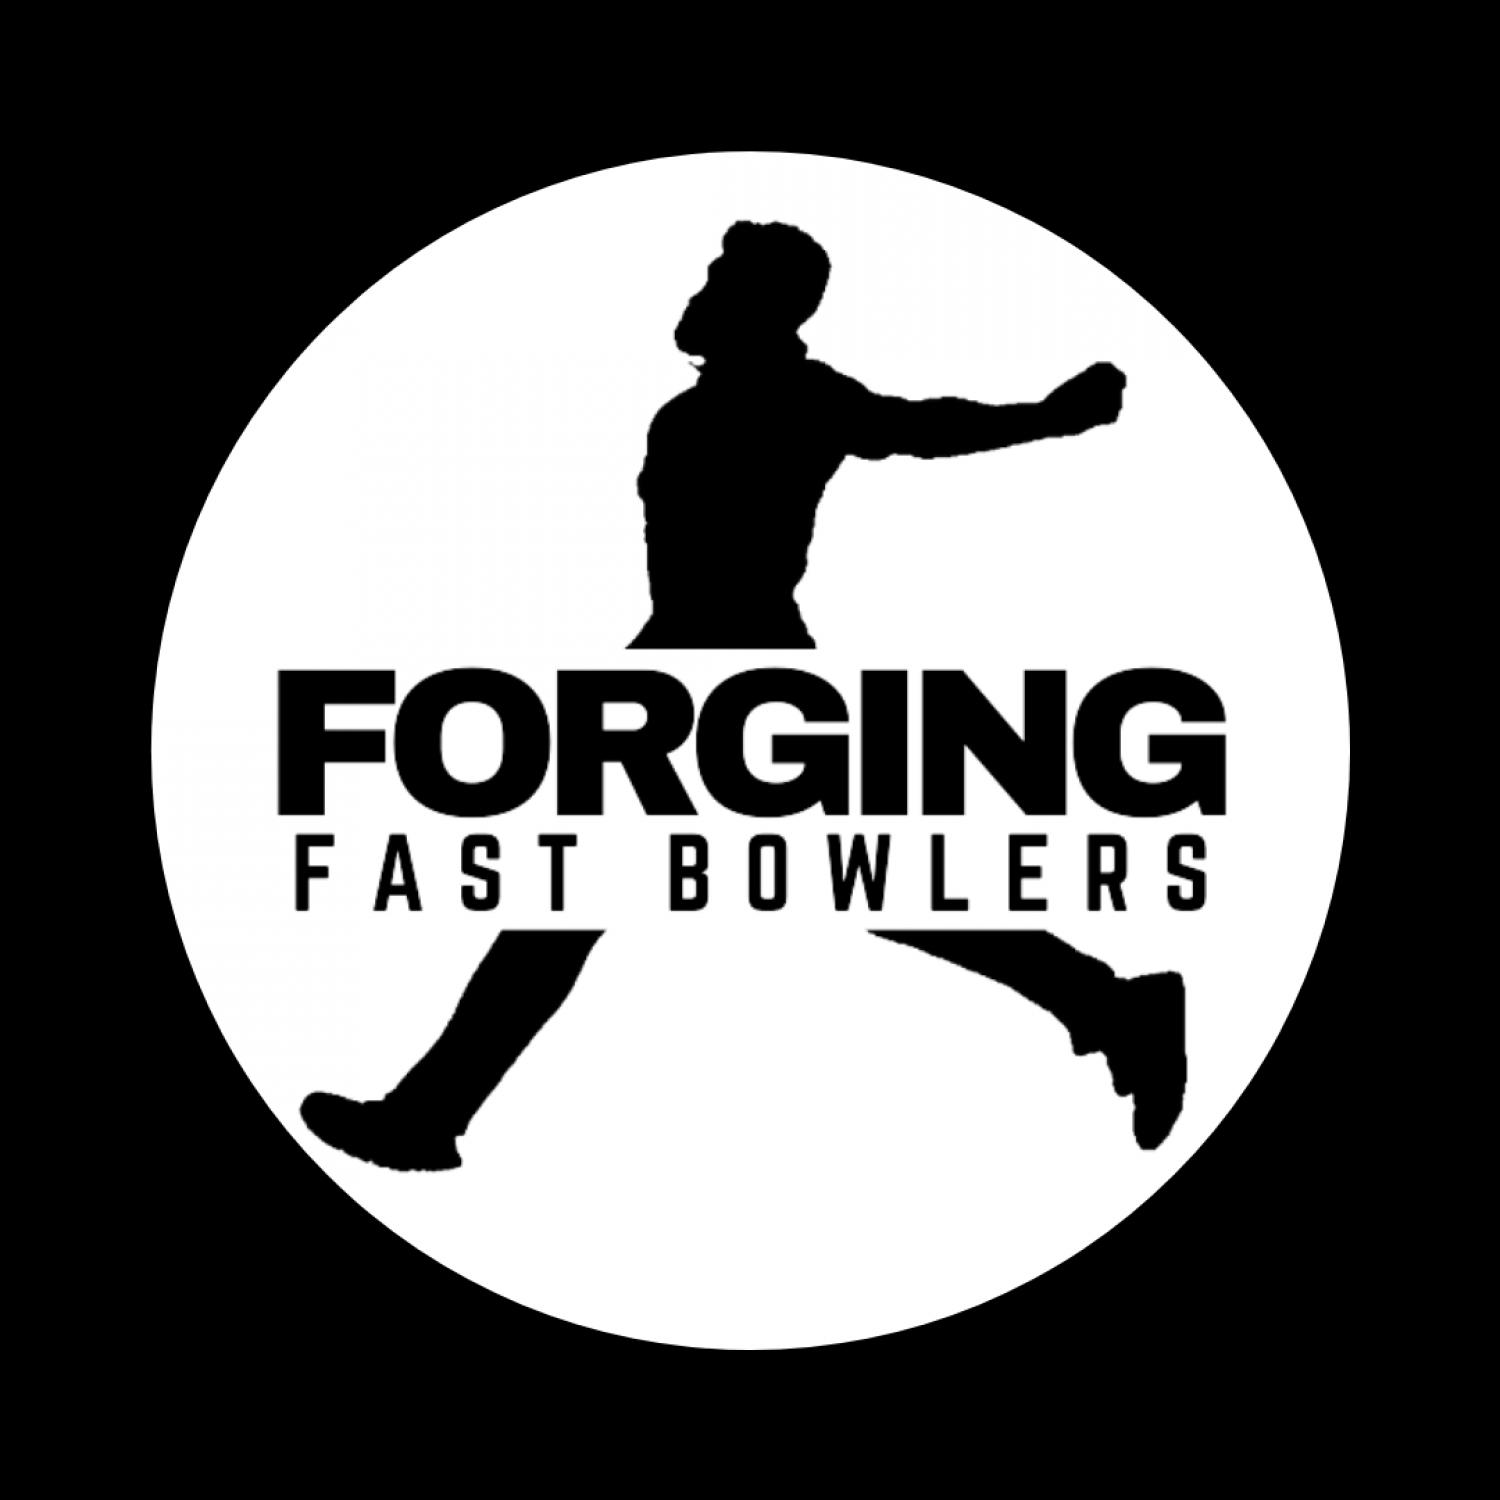 Forging fast bowlers | 16-week pre-season strength & conditioning program